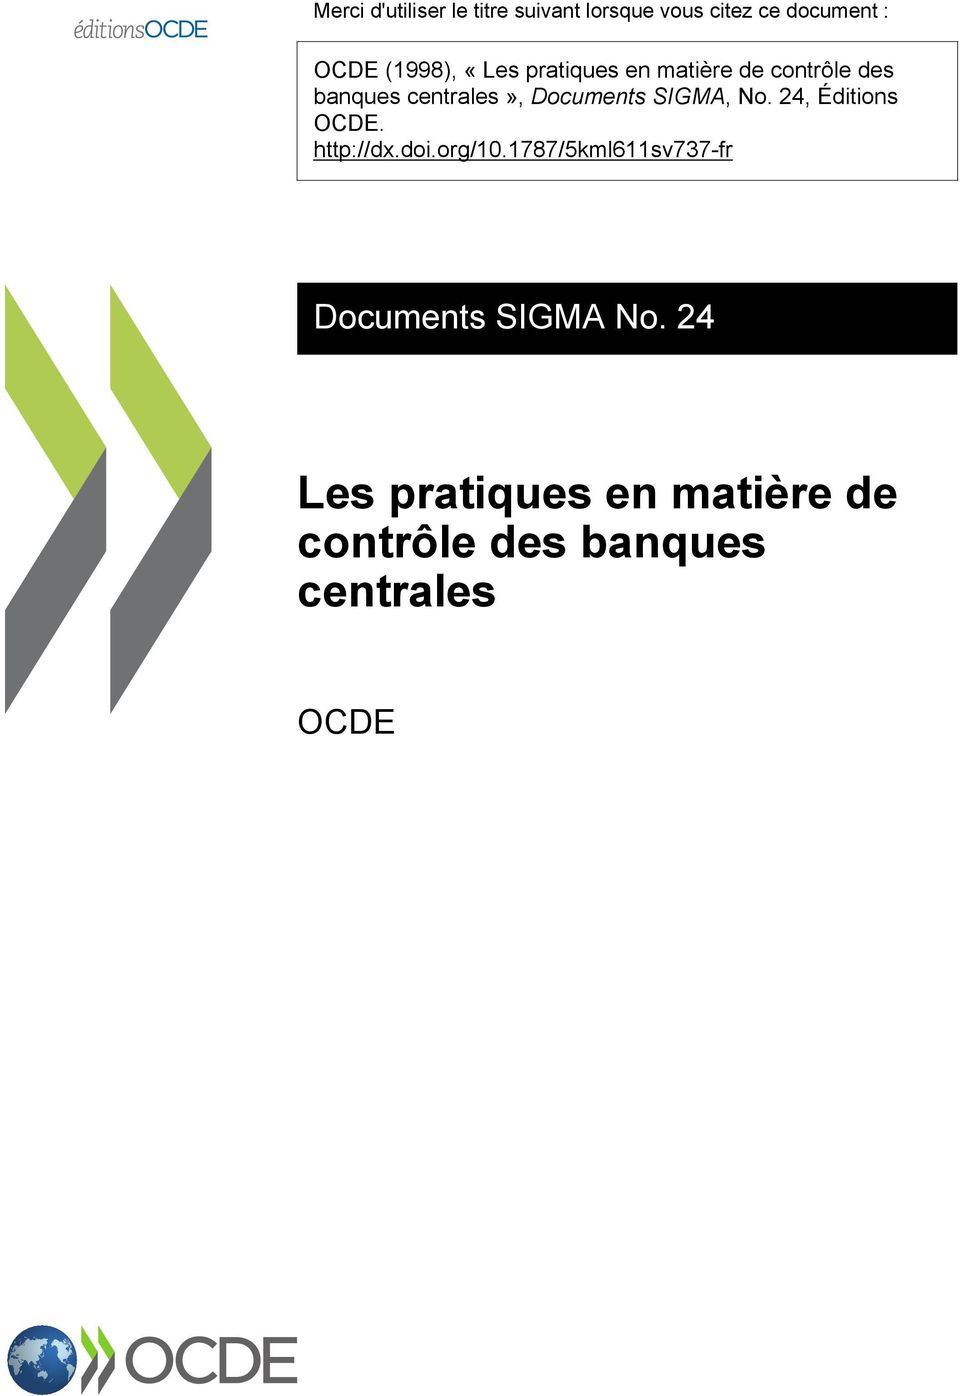 Documents SIGMA, No. 24, Éditions OCDE. http://dx.doi.org/10.